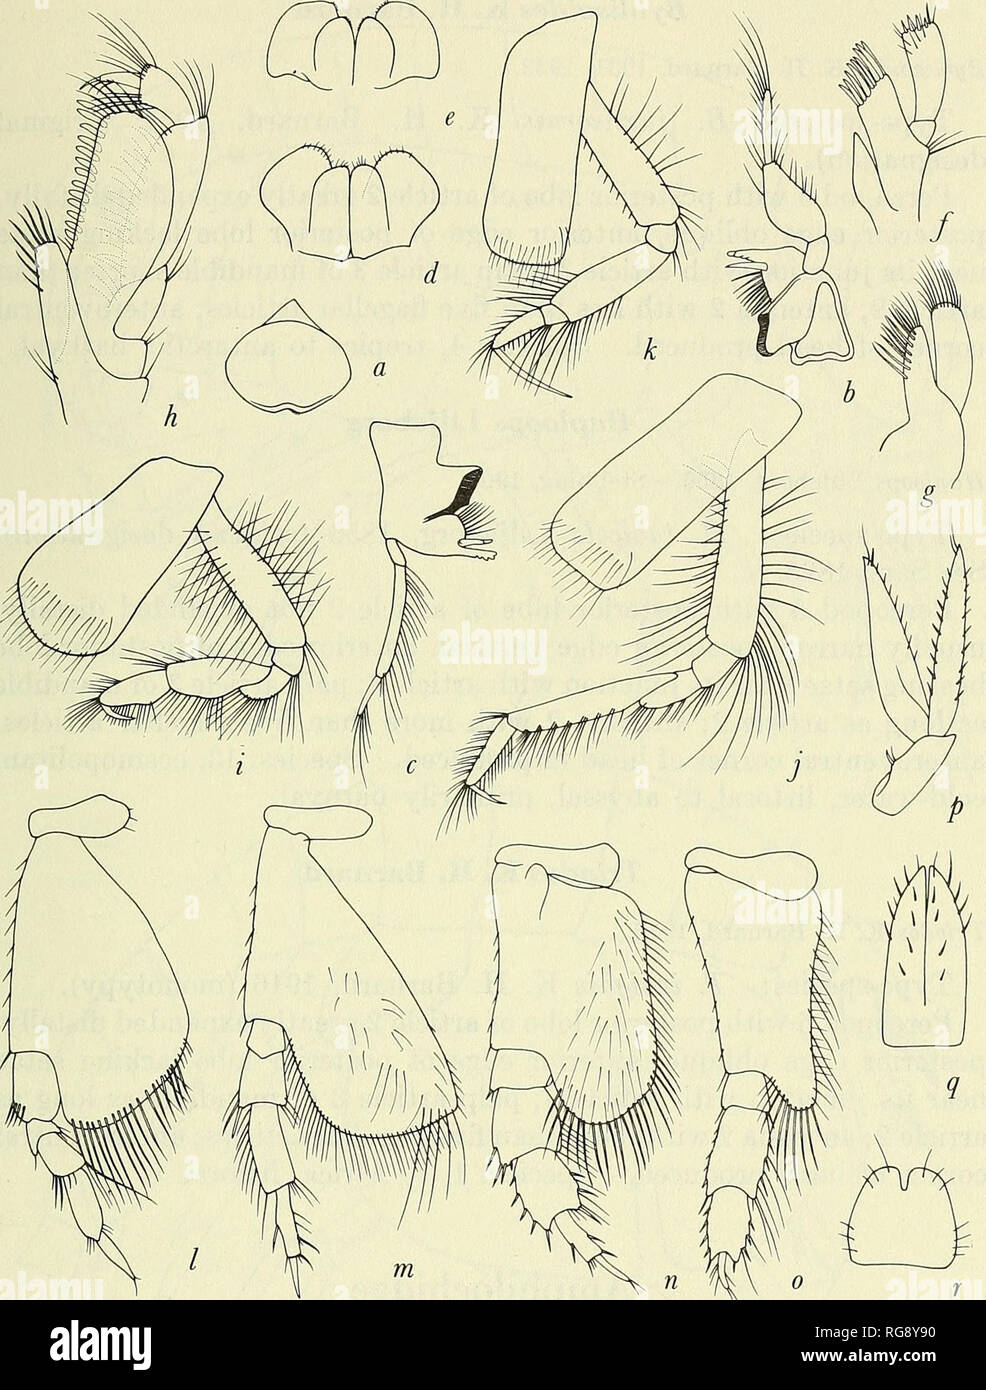 . Bulletin - United States National Museum. Science. MARESTE GAMMARIDEAJSr AMPHIPODA 131. Figure 58.—Ampeliscidae: Upper lip: a, Ampelisca typica (Bate) (Sars, 1895, pi. 57)- Mandible: b, Ampelisca; c, Byblis gaimardi (Kr0yer) (Sars, 1895, pi. 64). Lower lip: d, Ampelisca; e, Byblis. Maxillae 1-2: f,g, Ampelisca. Maxilliped: h, Ampelisca. Gnathopods 1-2, Pereopods 1,5: i,j,k,l, Ampelisca. Pereopod 5: m, Byblis; n, Haploops setosa Boeck (Sars, 1895, pi. 68); o, Haploops tubicola Liljeborg (Sars, 1895, pi. 67). Uro= pod 3: p, Ampelisca. Telson: q, Ampelisca; r, Byblis.. Please note that these im Stock Photo